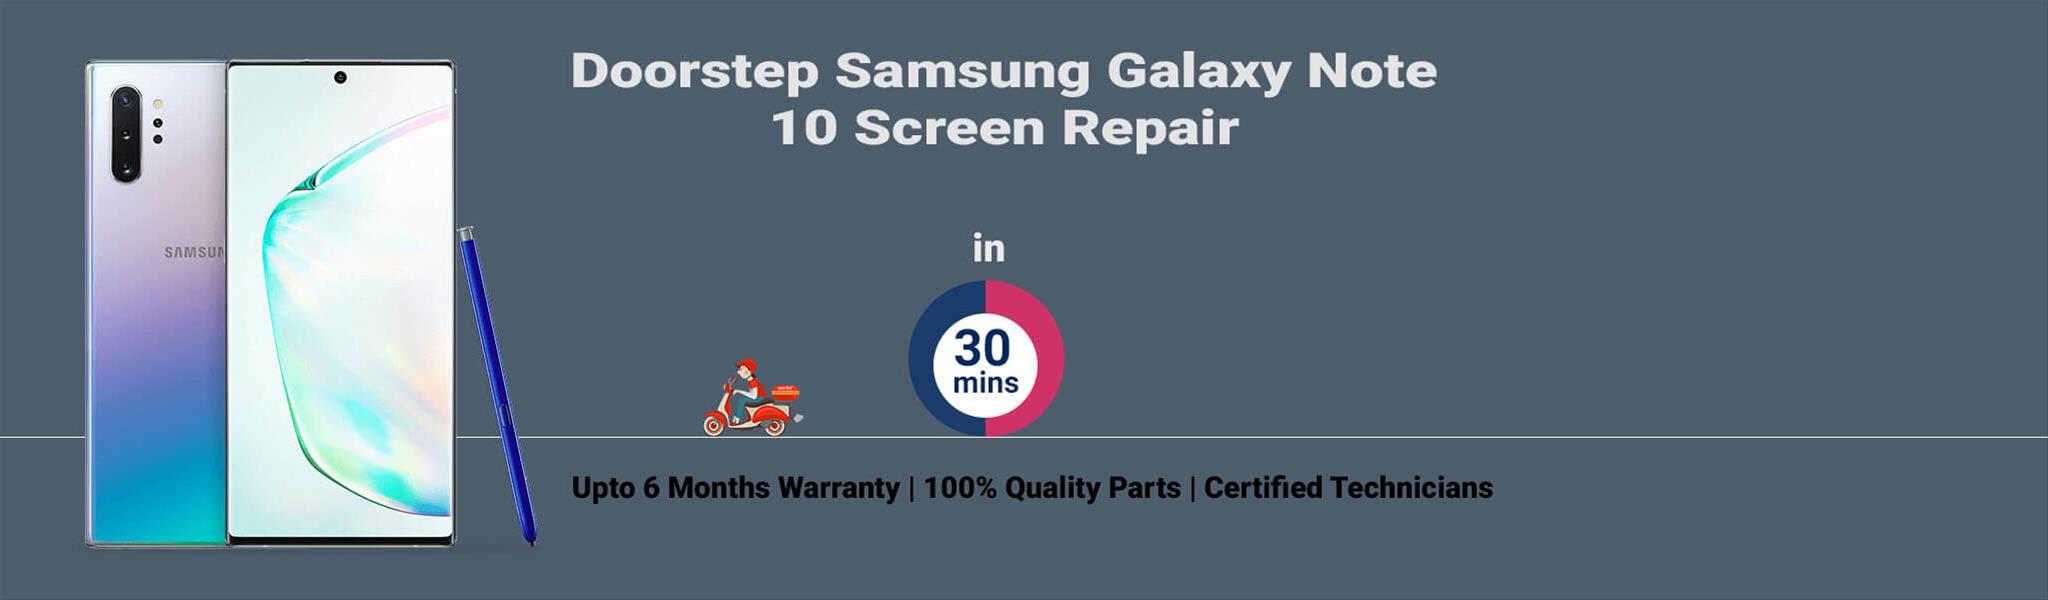 samsung-galaxy-note-10-screen-repair.jpg